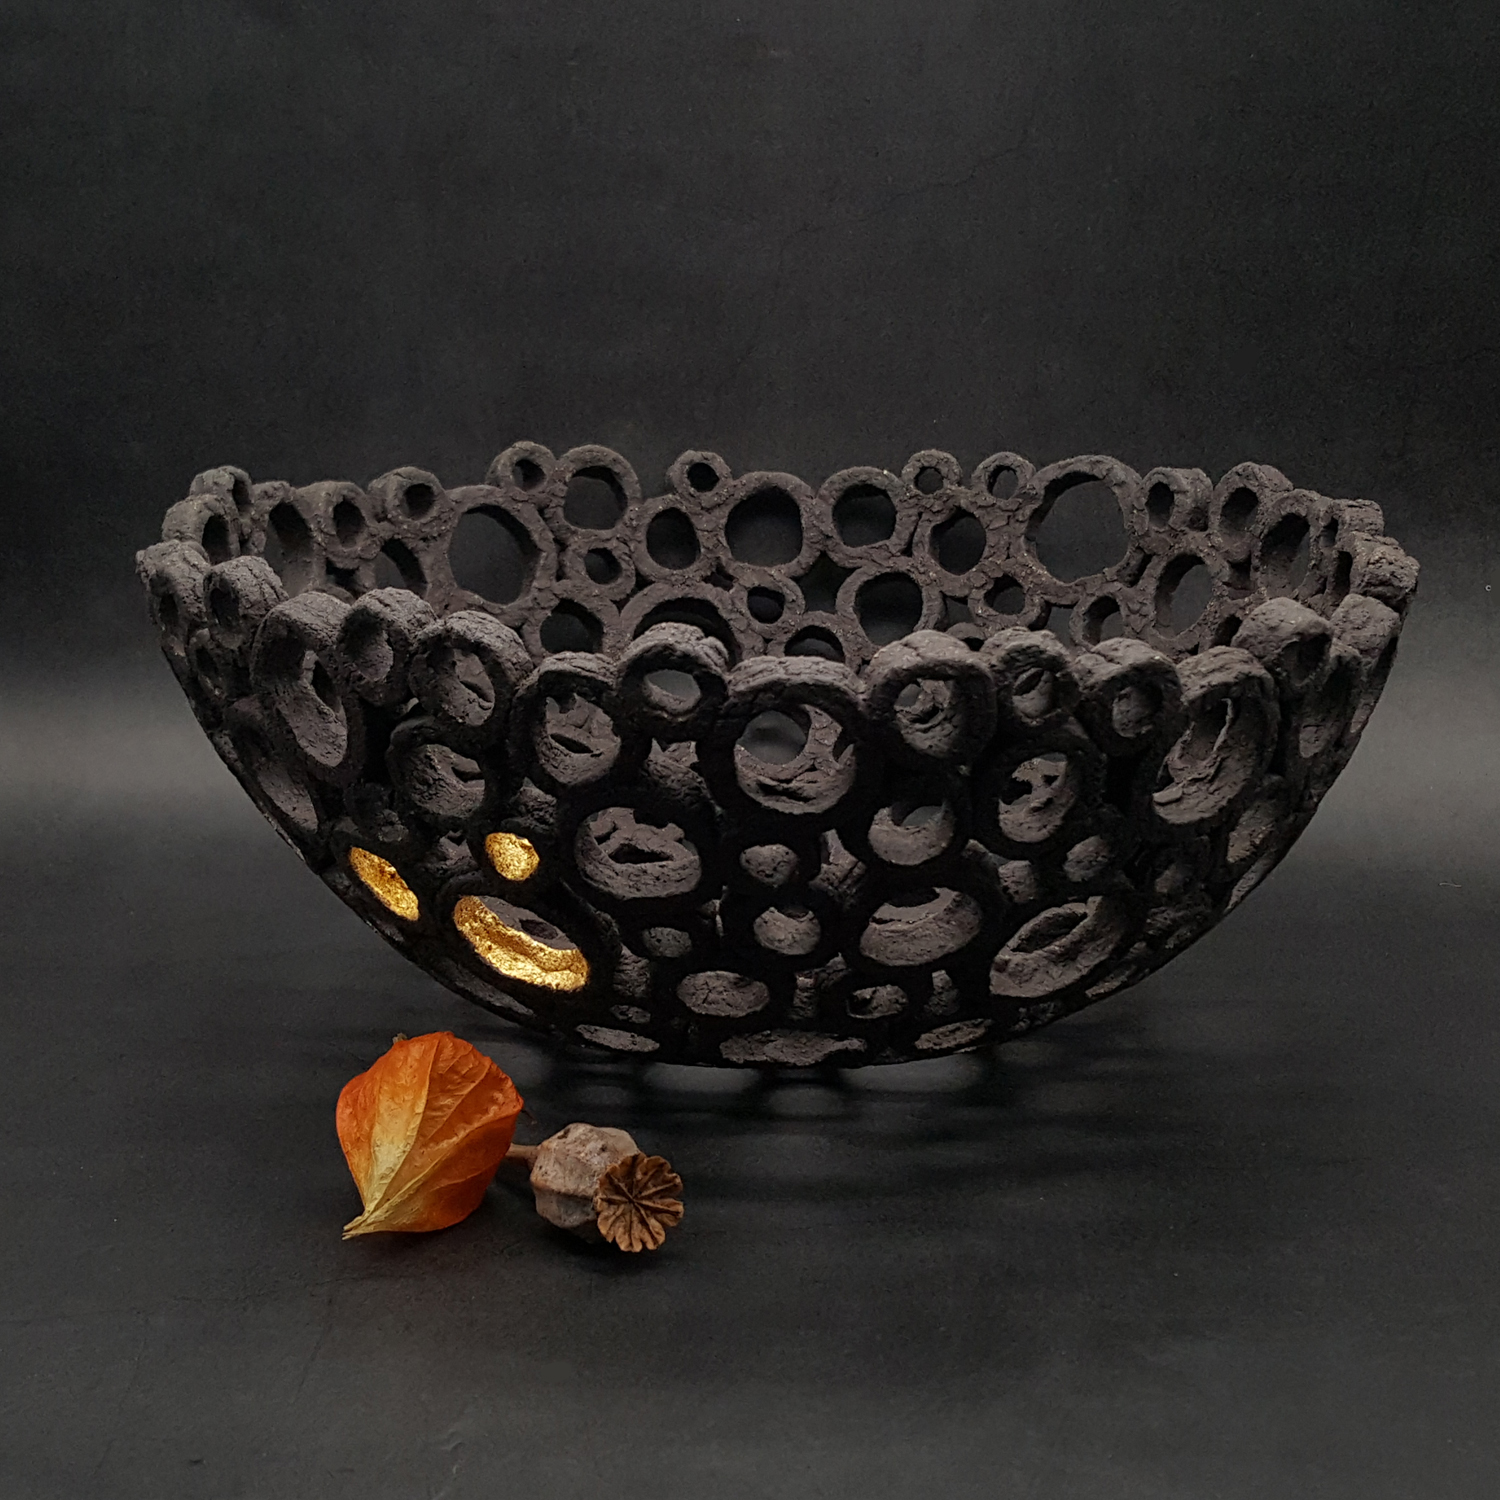 Medium Dark Circles Bowl with 24ct Gold Leaf